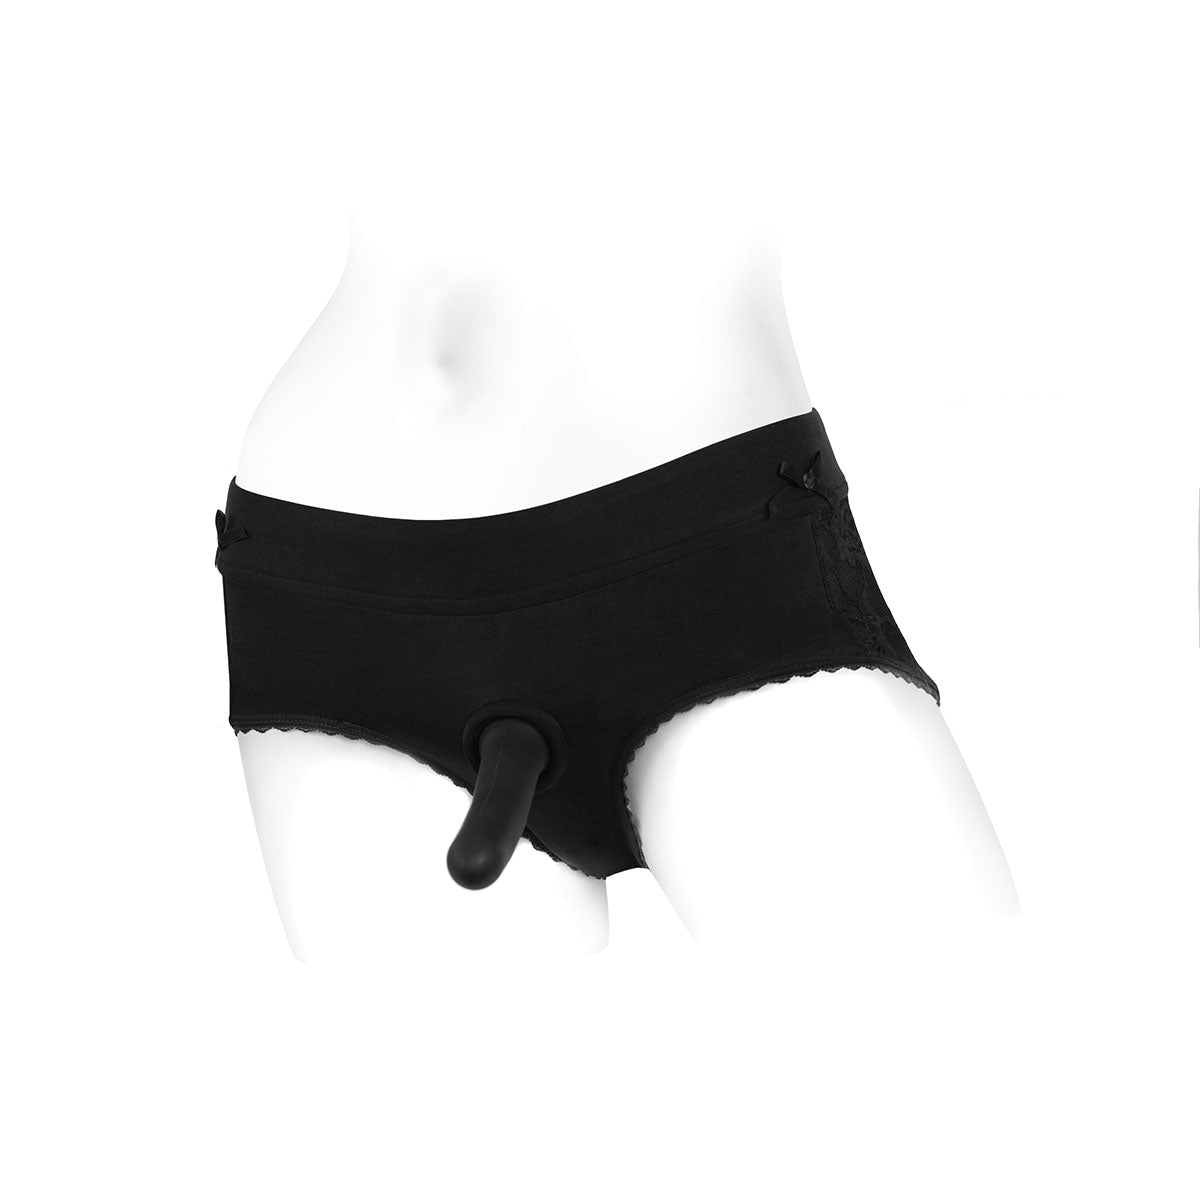 SpareParts Bella Harness Black-Black Nylon - Large Intimates Adult Boutique